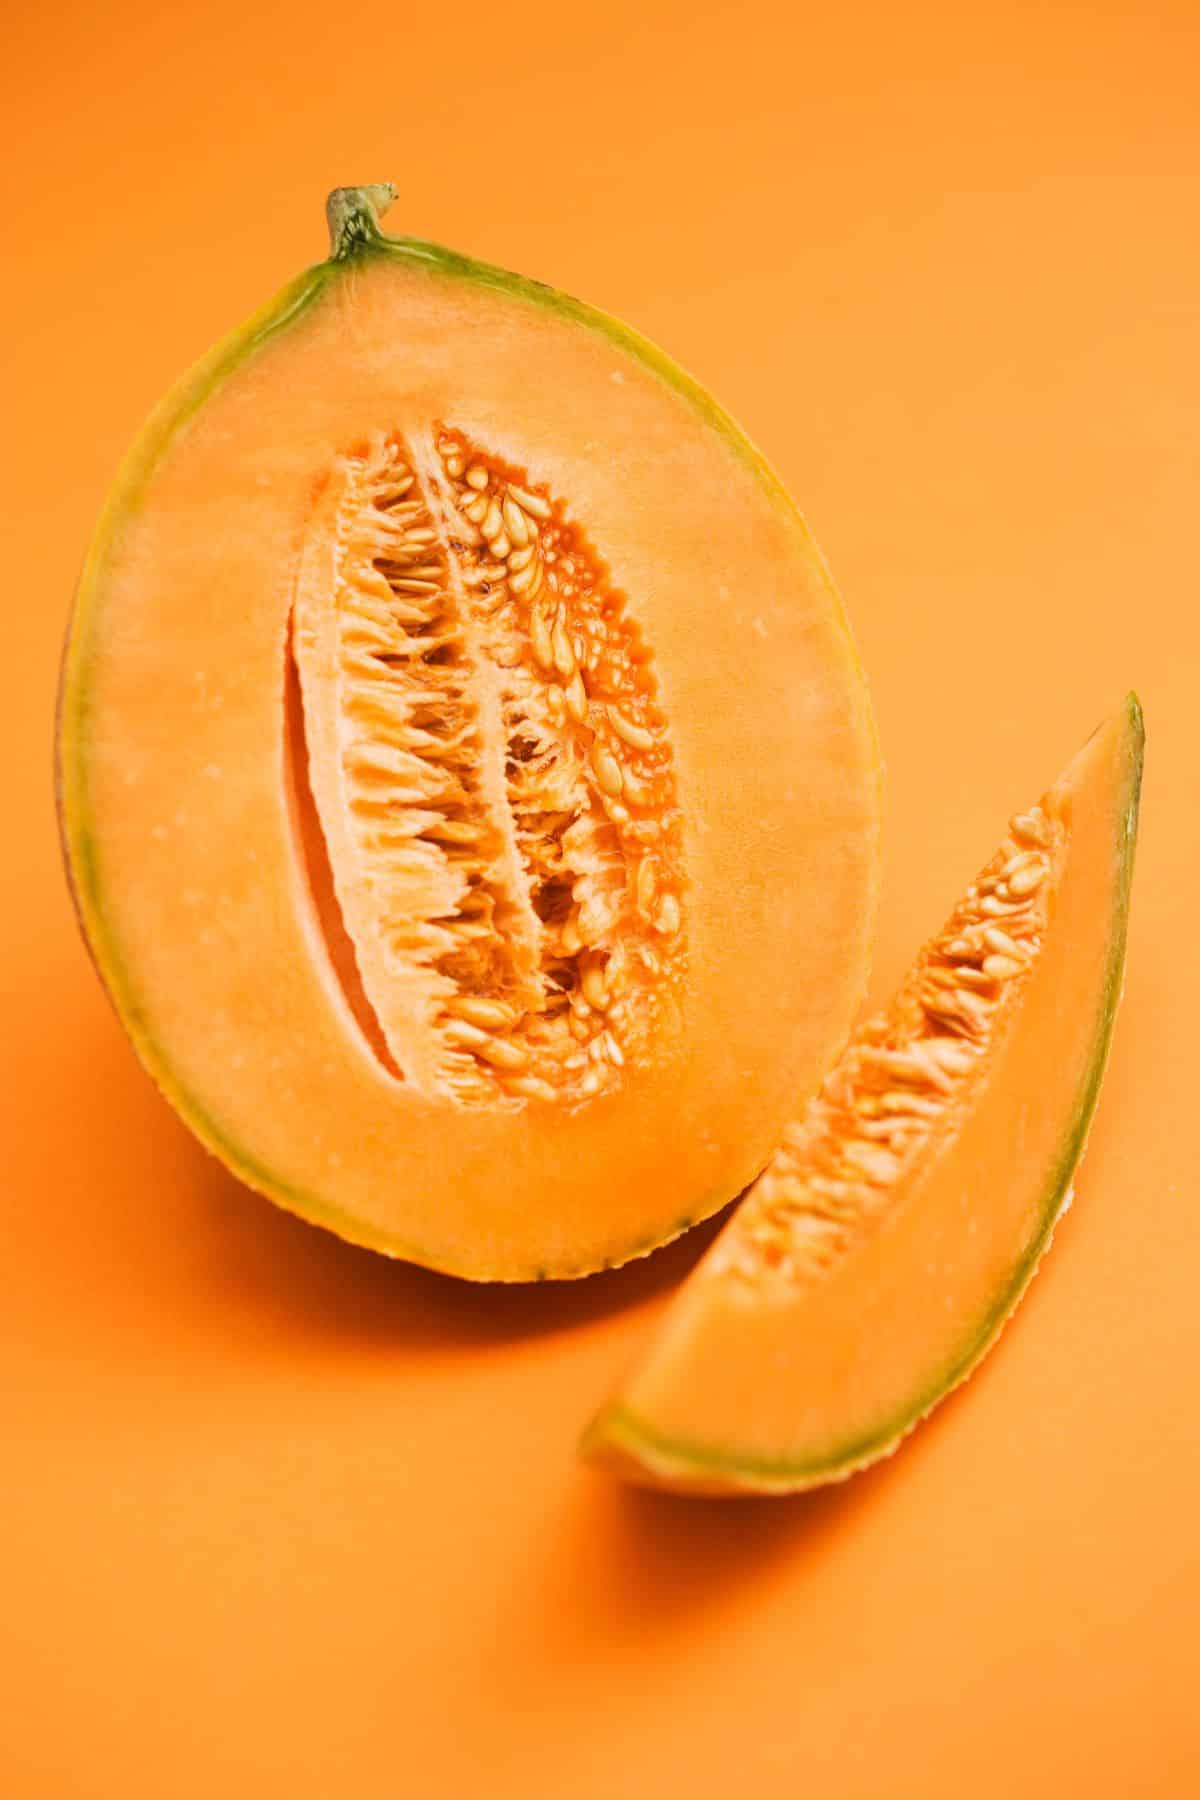 a sliced cantaloupe on an orange background.